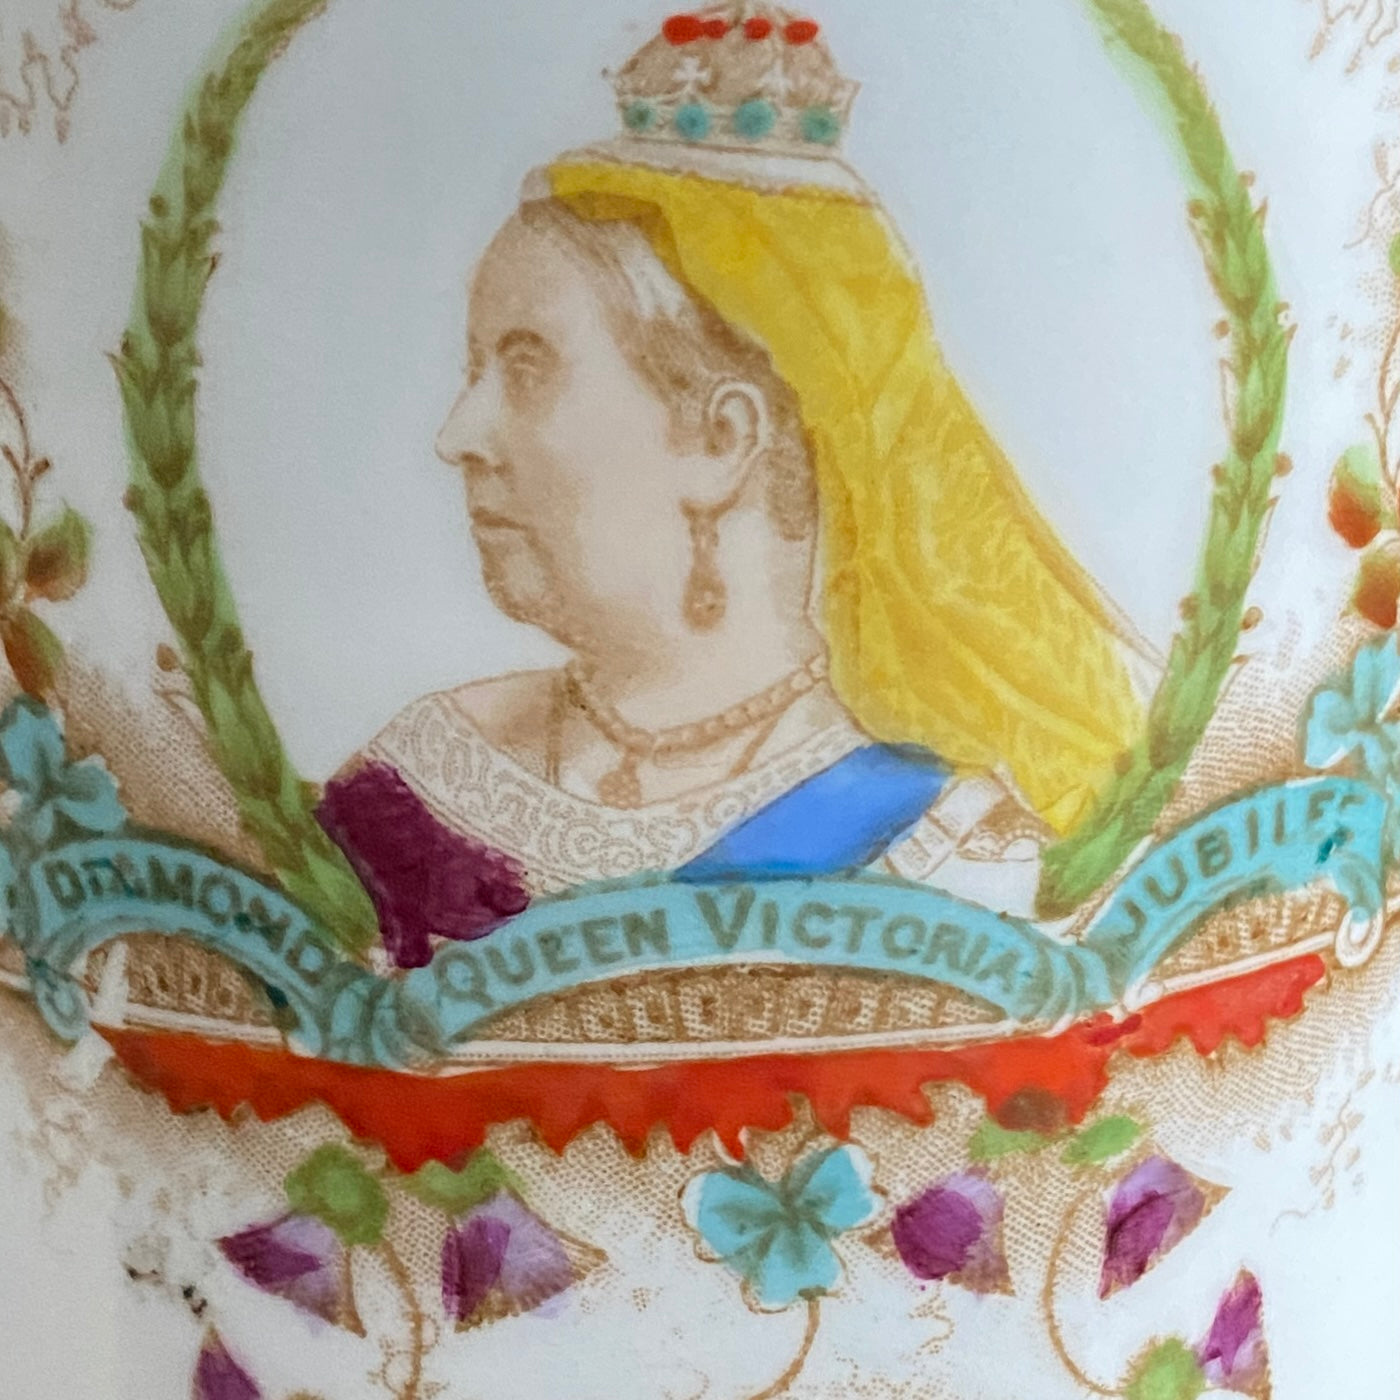 Queen Victoria Diamond Jubilee Mug